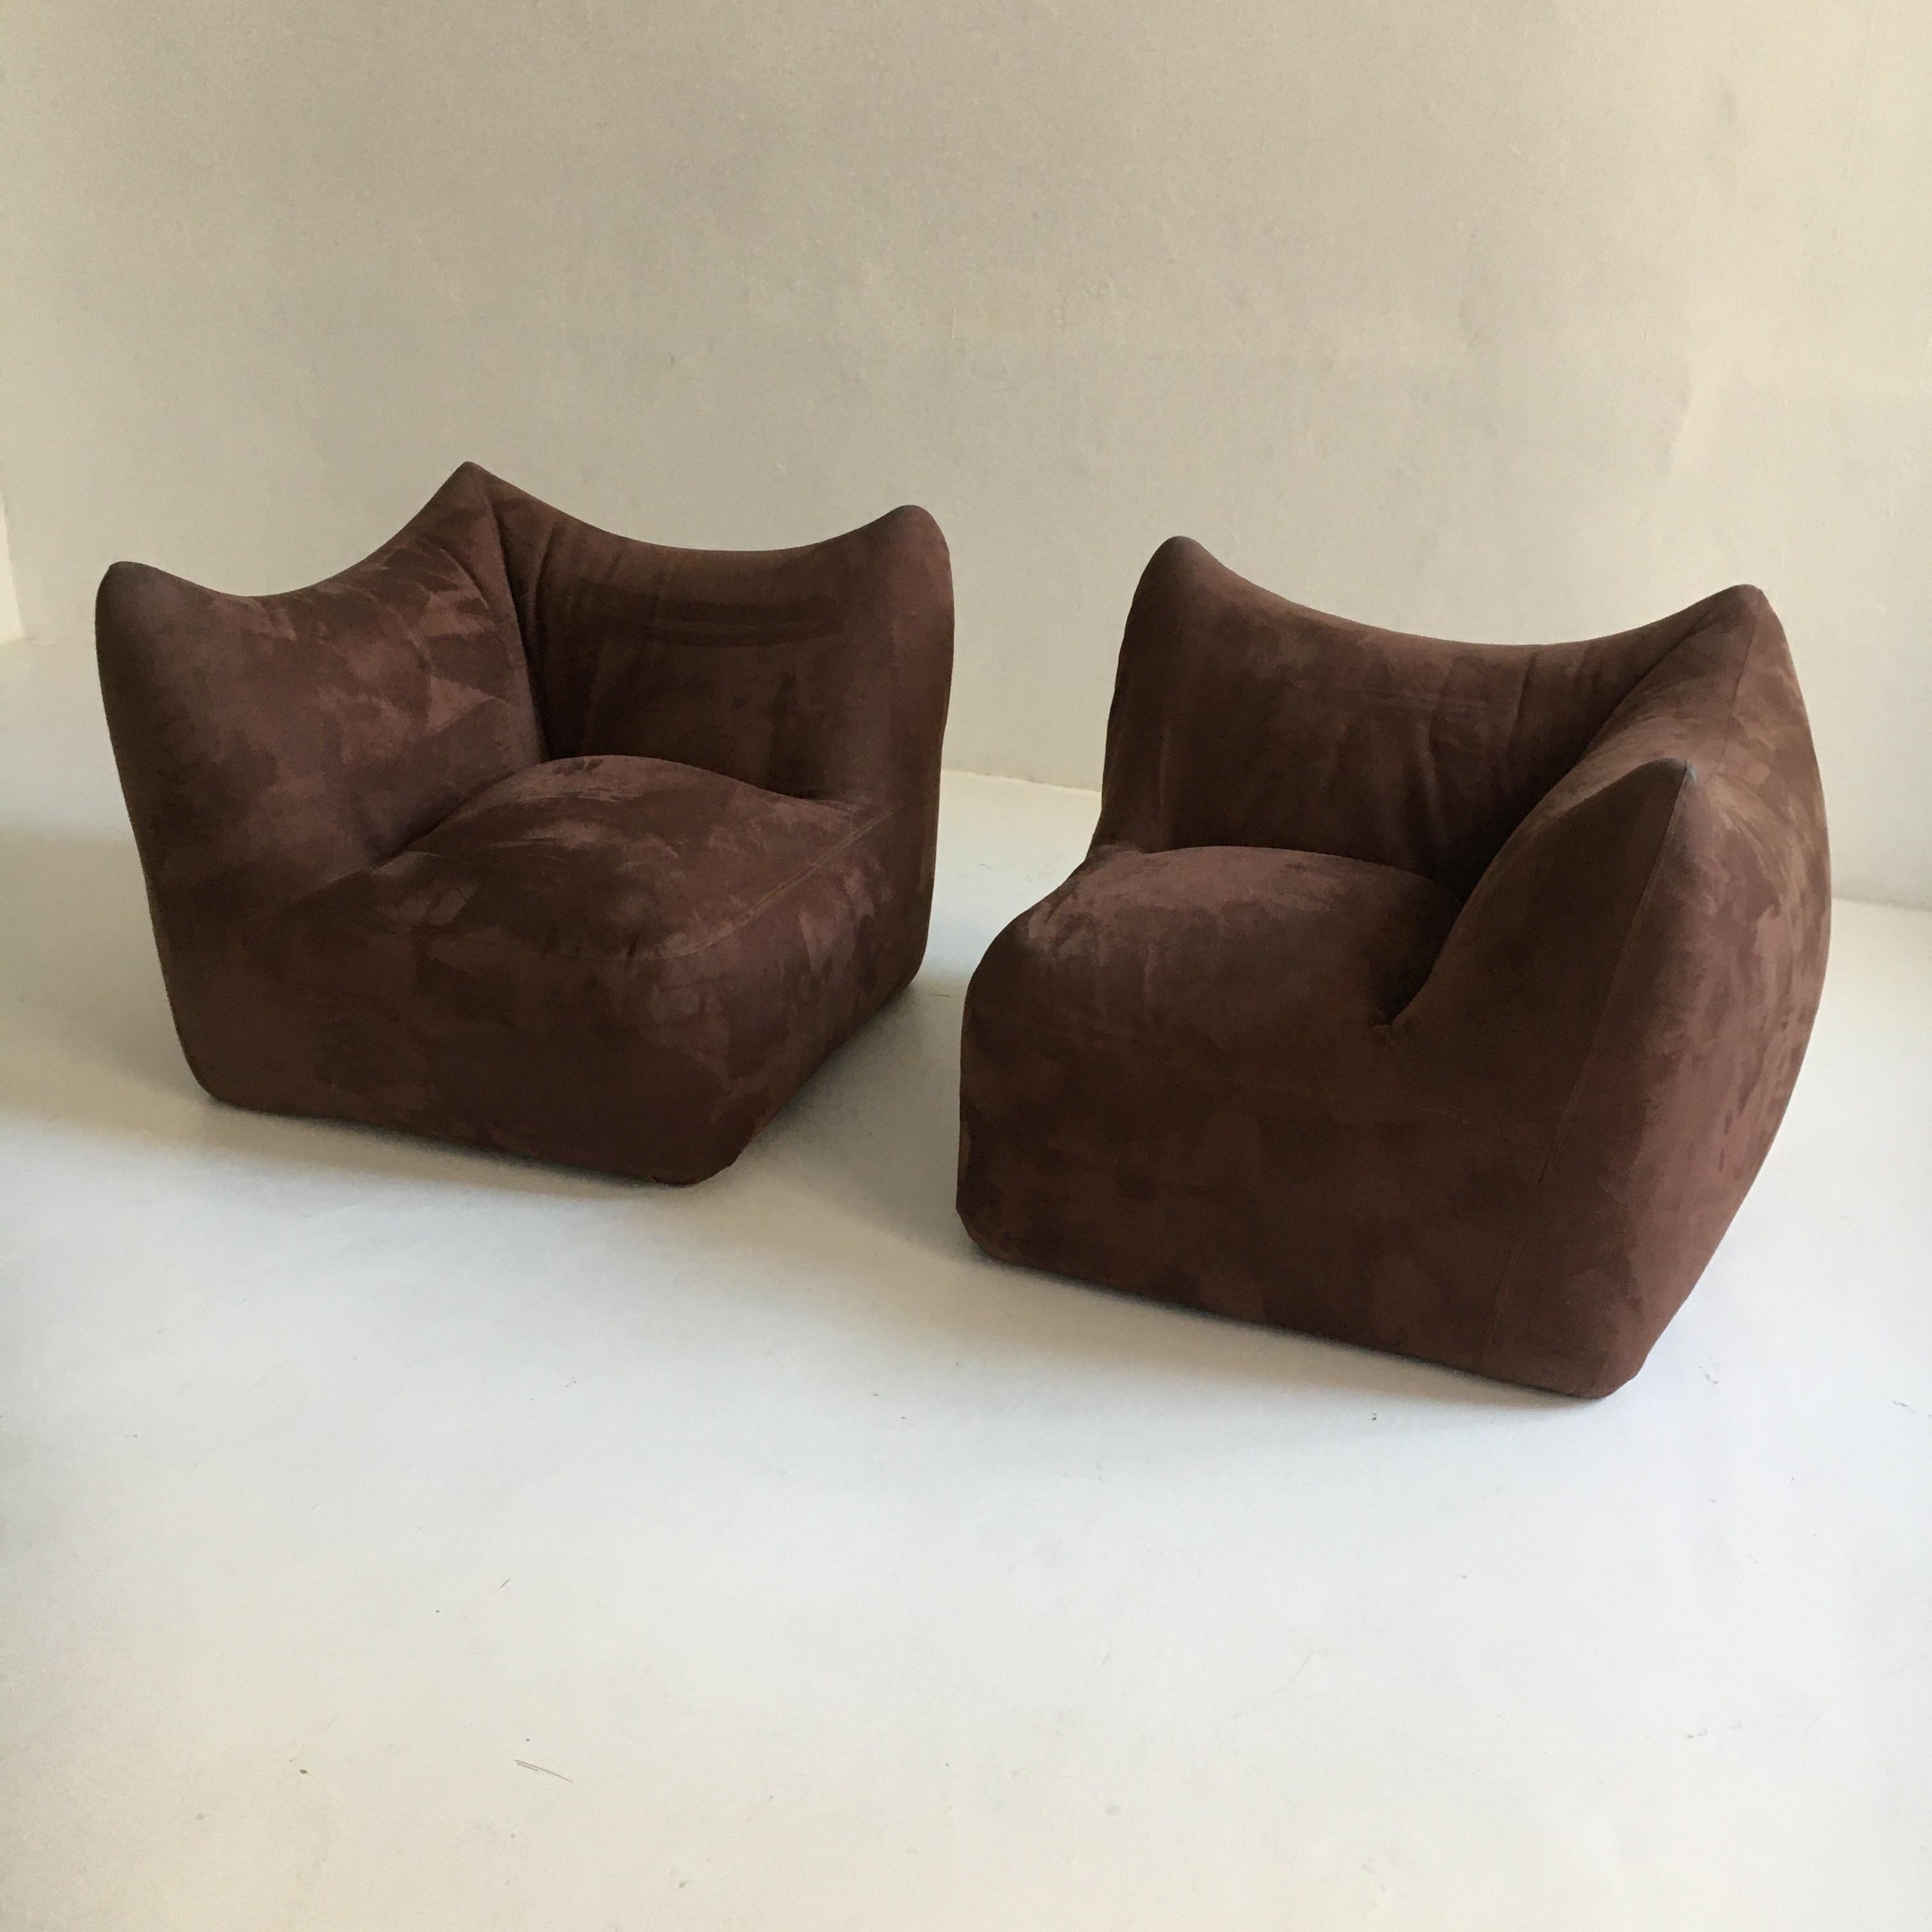 Mario Bellini 'Le Bambole' two modular elements, pair of lounge chairs, Italy 1976. Signed B&B Italia.